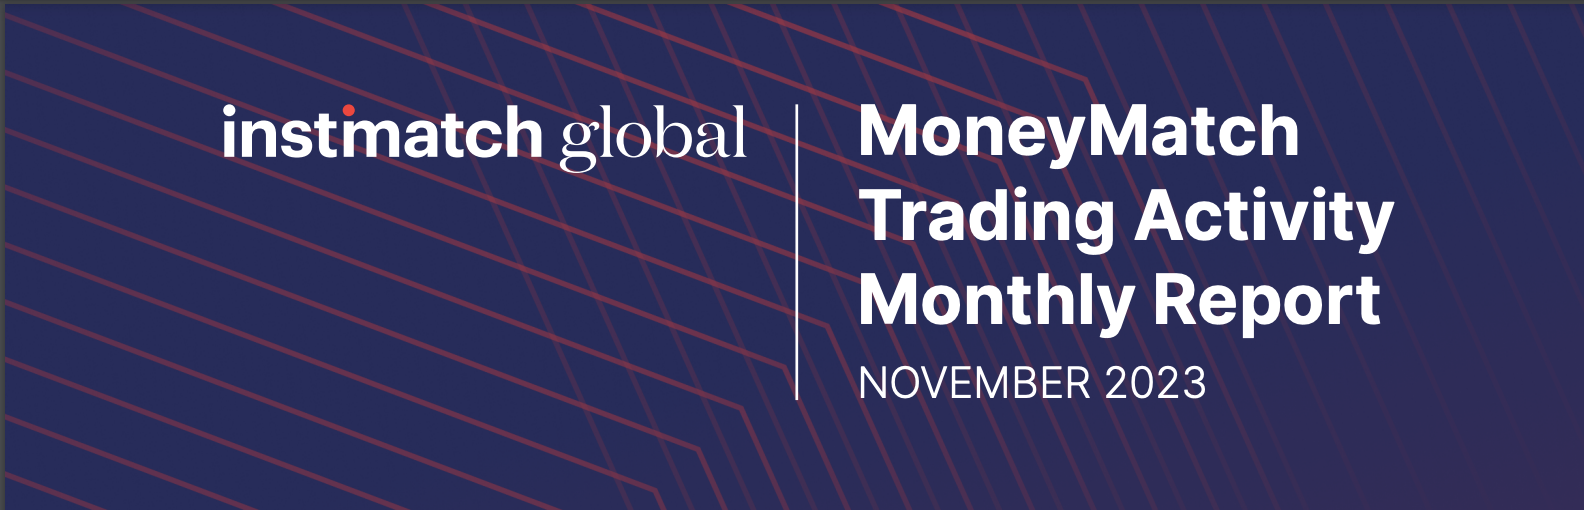 MoneyMatch Trading Activity Monthly Report – NOVEMBER 2023